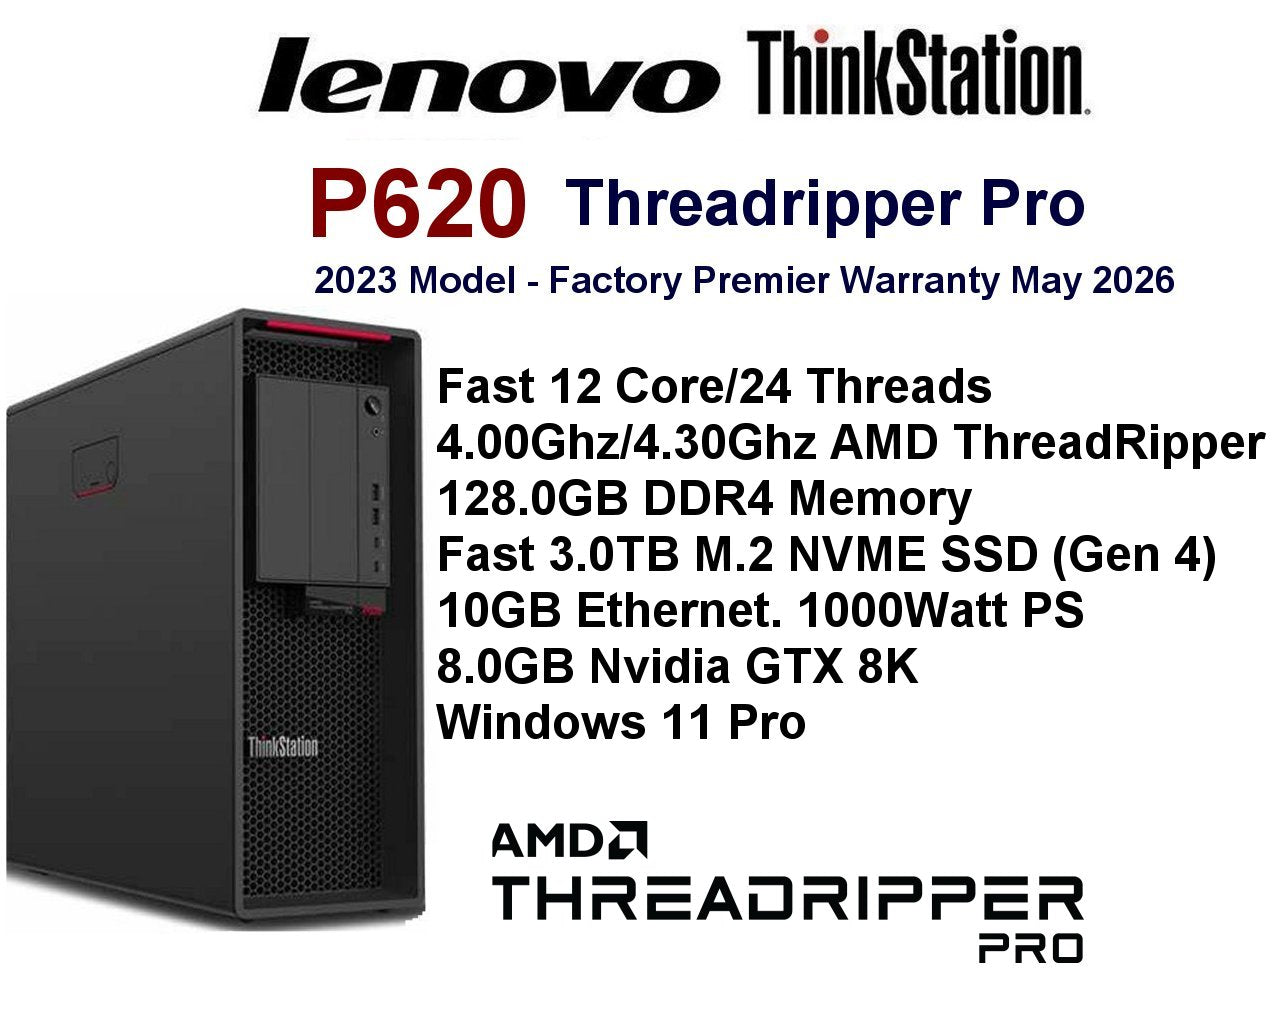 Lenovo ThinkStation P620 ThreadRipper Workstation PC 4.00Ghz-4.30Ghz 128GB Ram 3.0TB SSD 8.0GB Nvidia GTX Windows 11 Pro